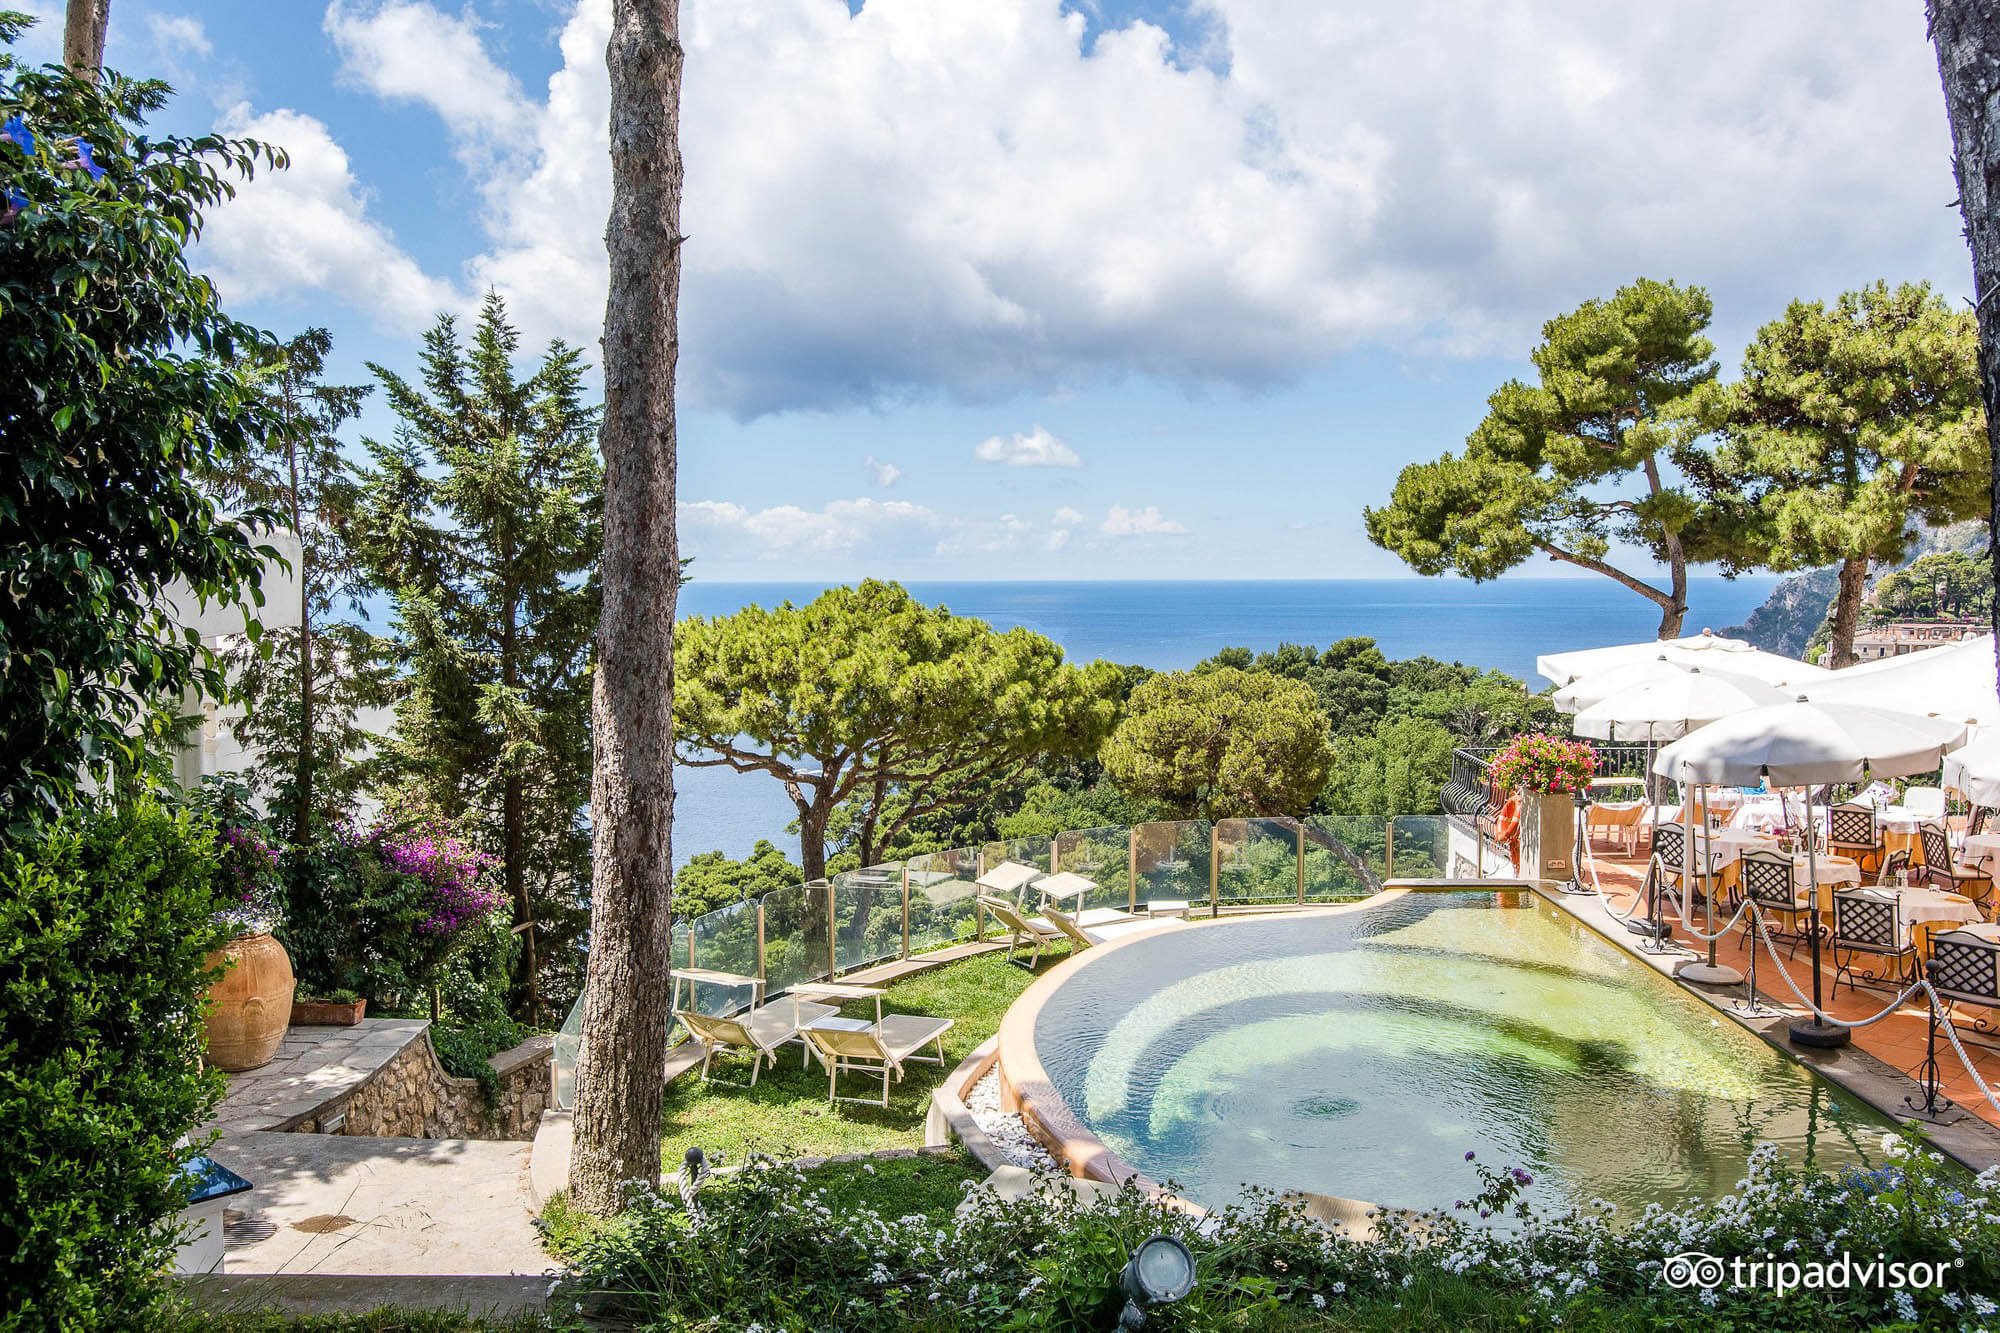 Pool views at Casa Morgano, 5 star luxury hotel in Capri